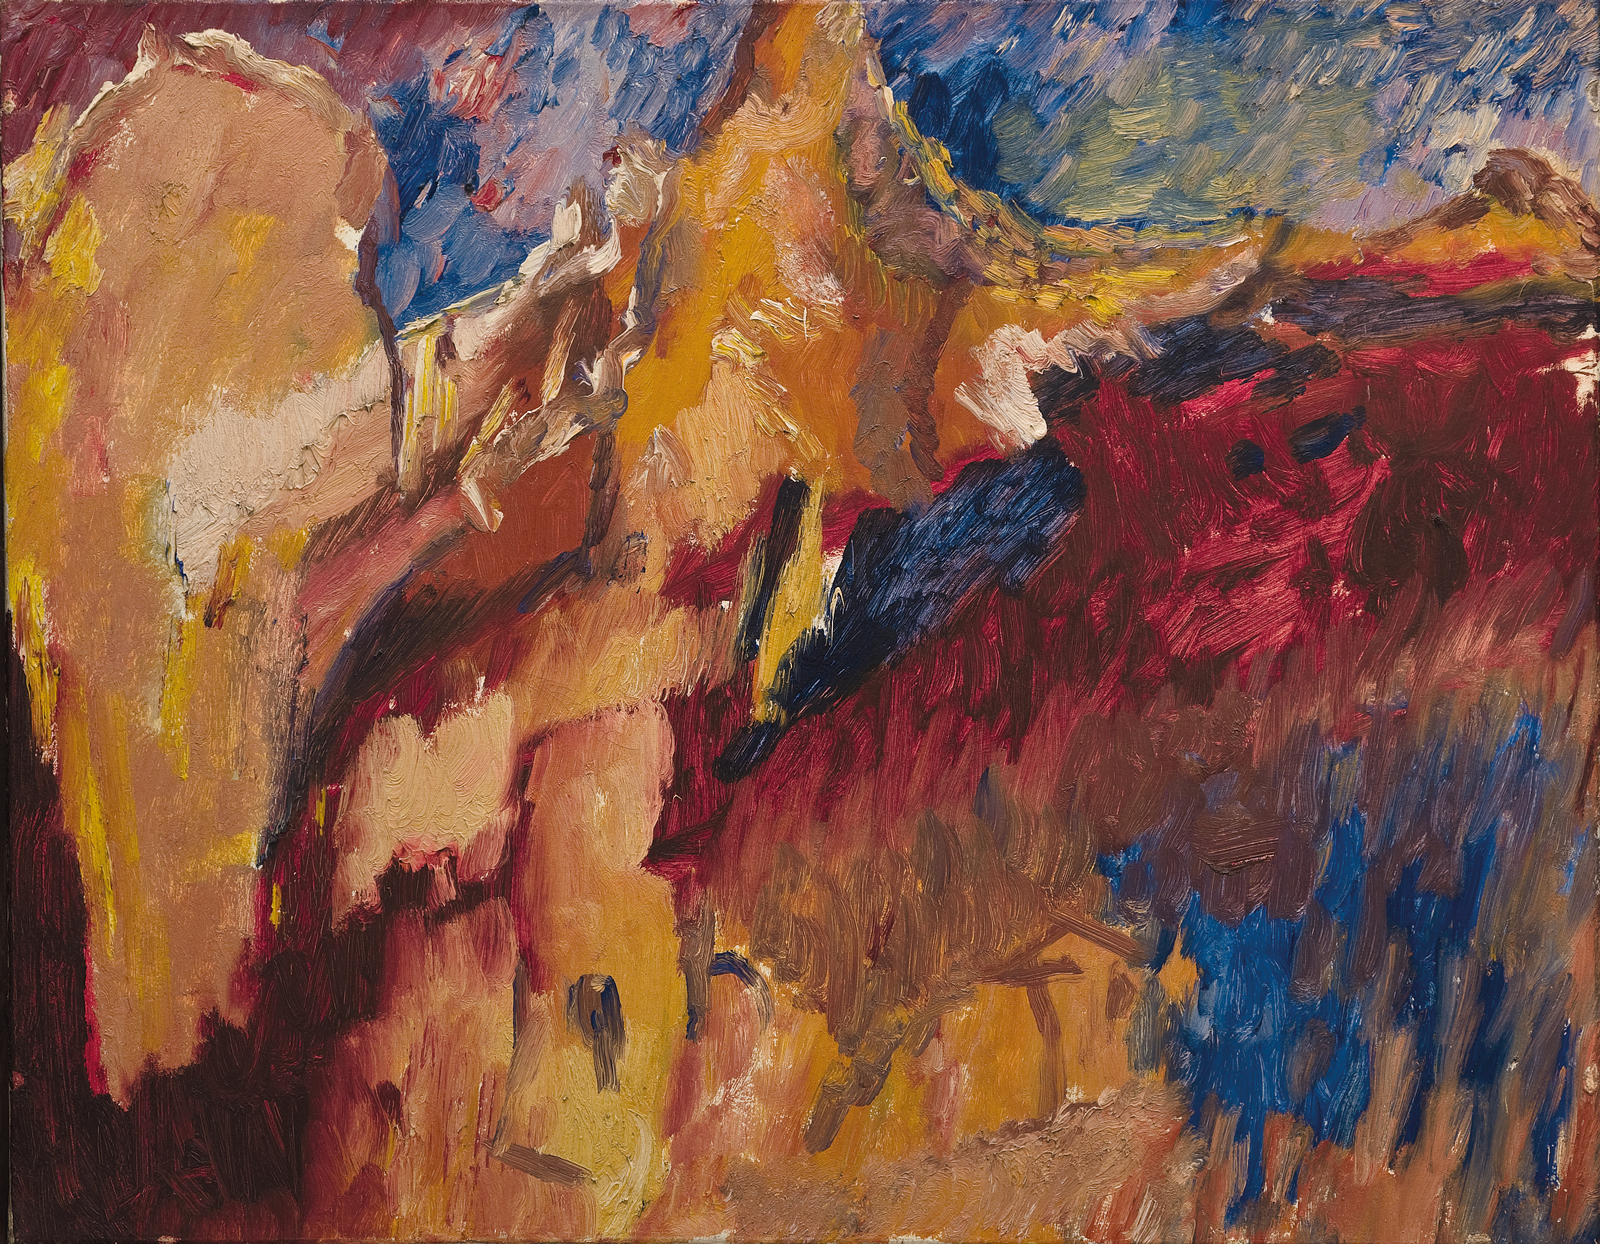 David Bomberg: Tajo and Rocks (The Last Landscape), 1956